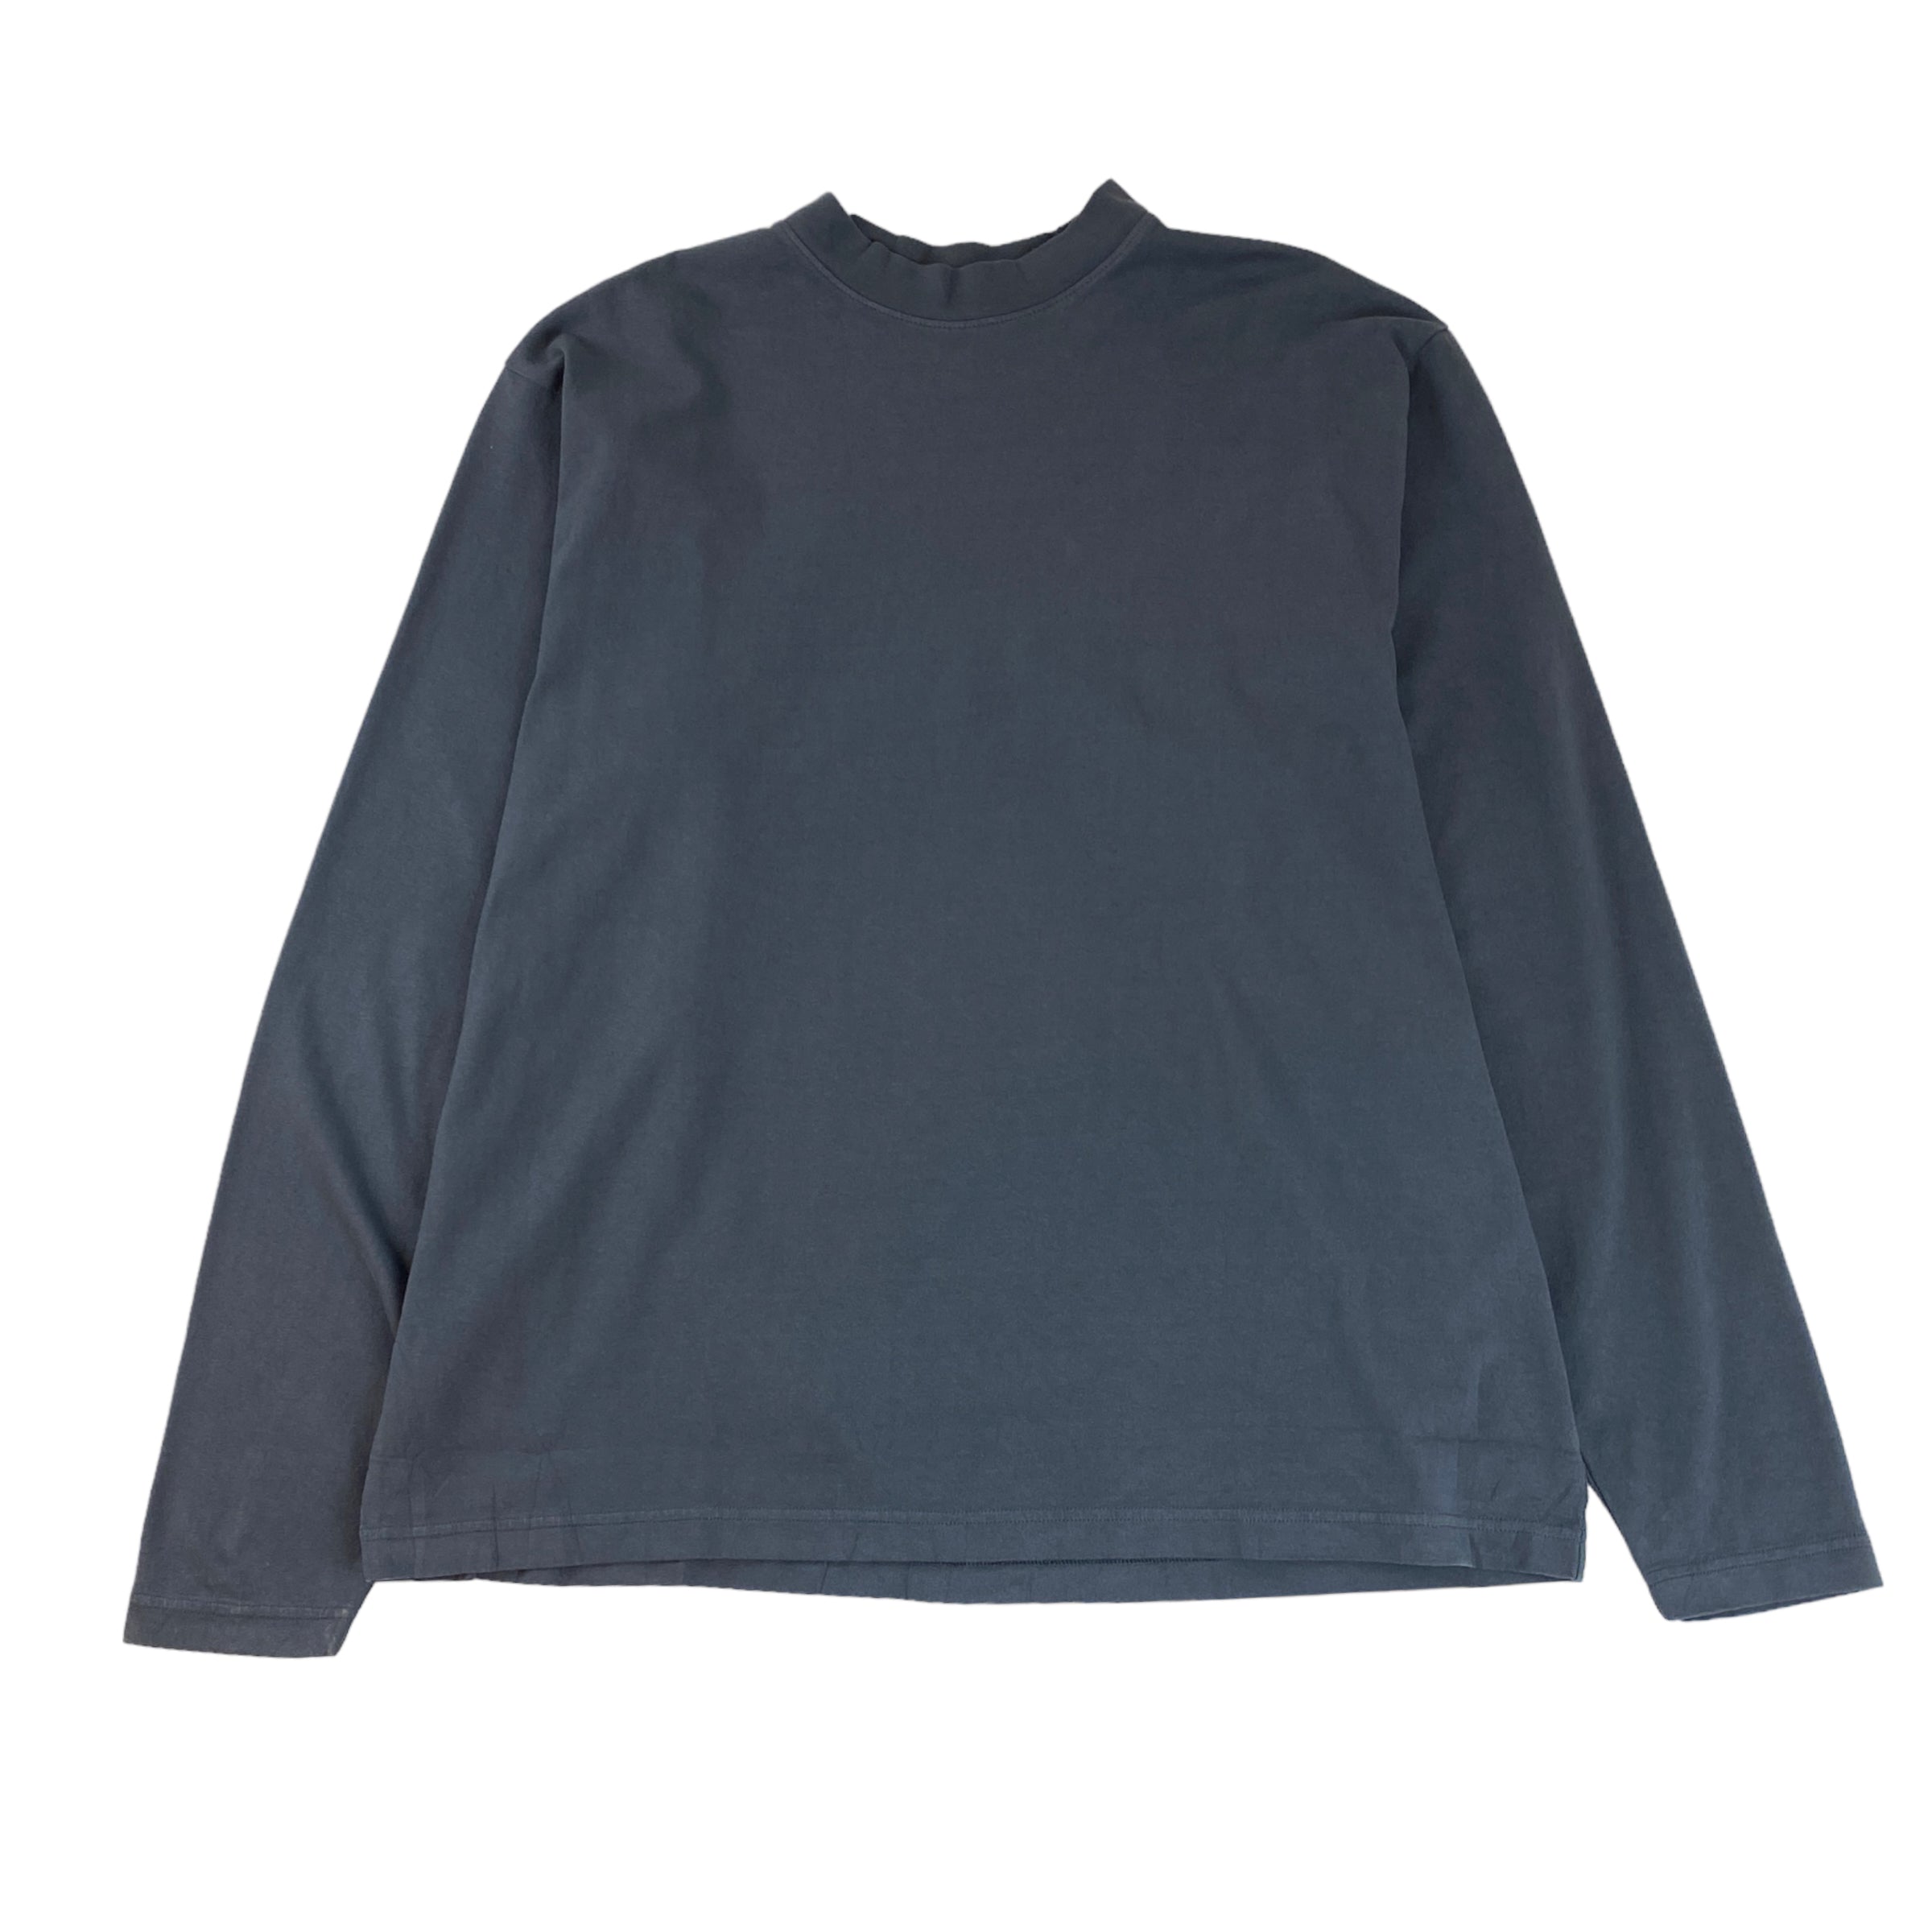 Yeezy x Gap Dark Grey Unreleased Longsleeve Shirt - Dark Grey Shirt